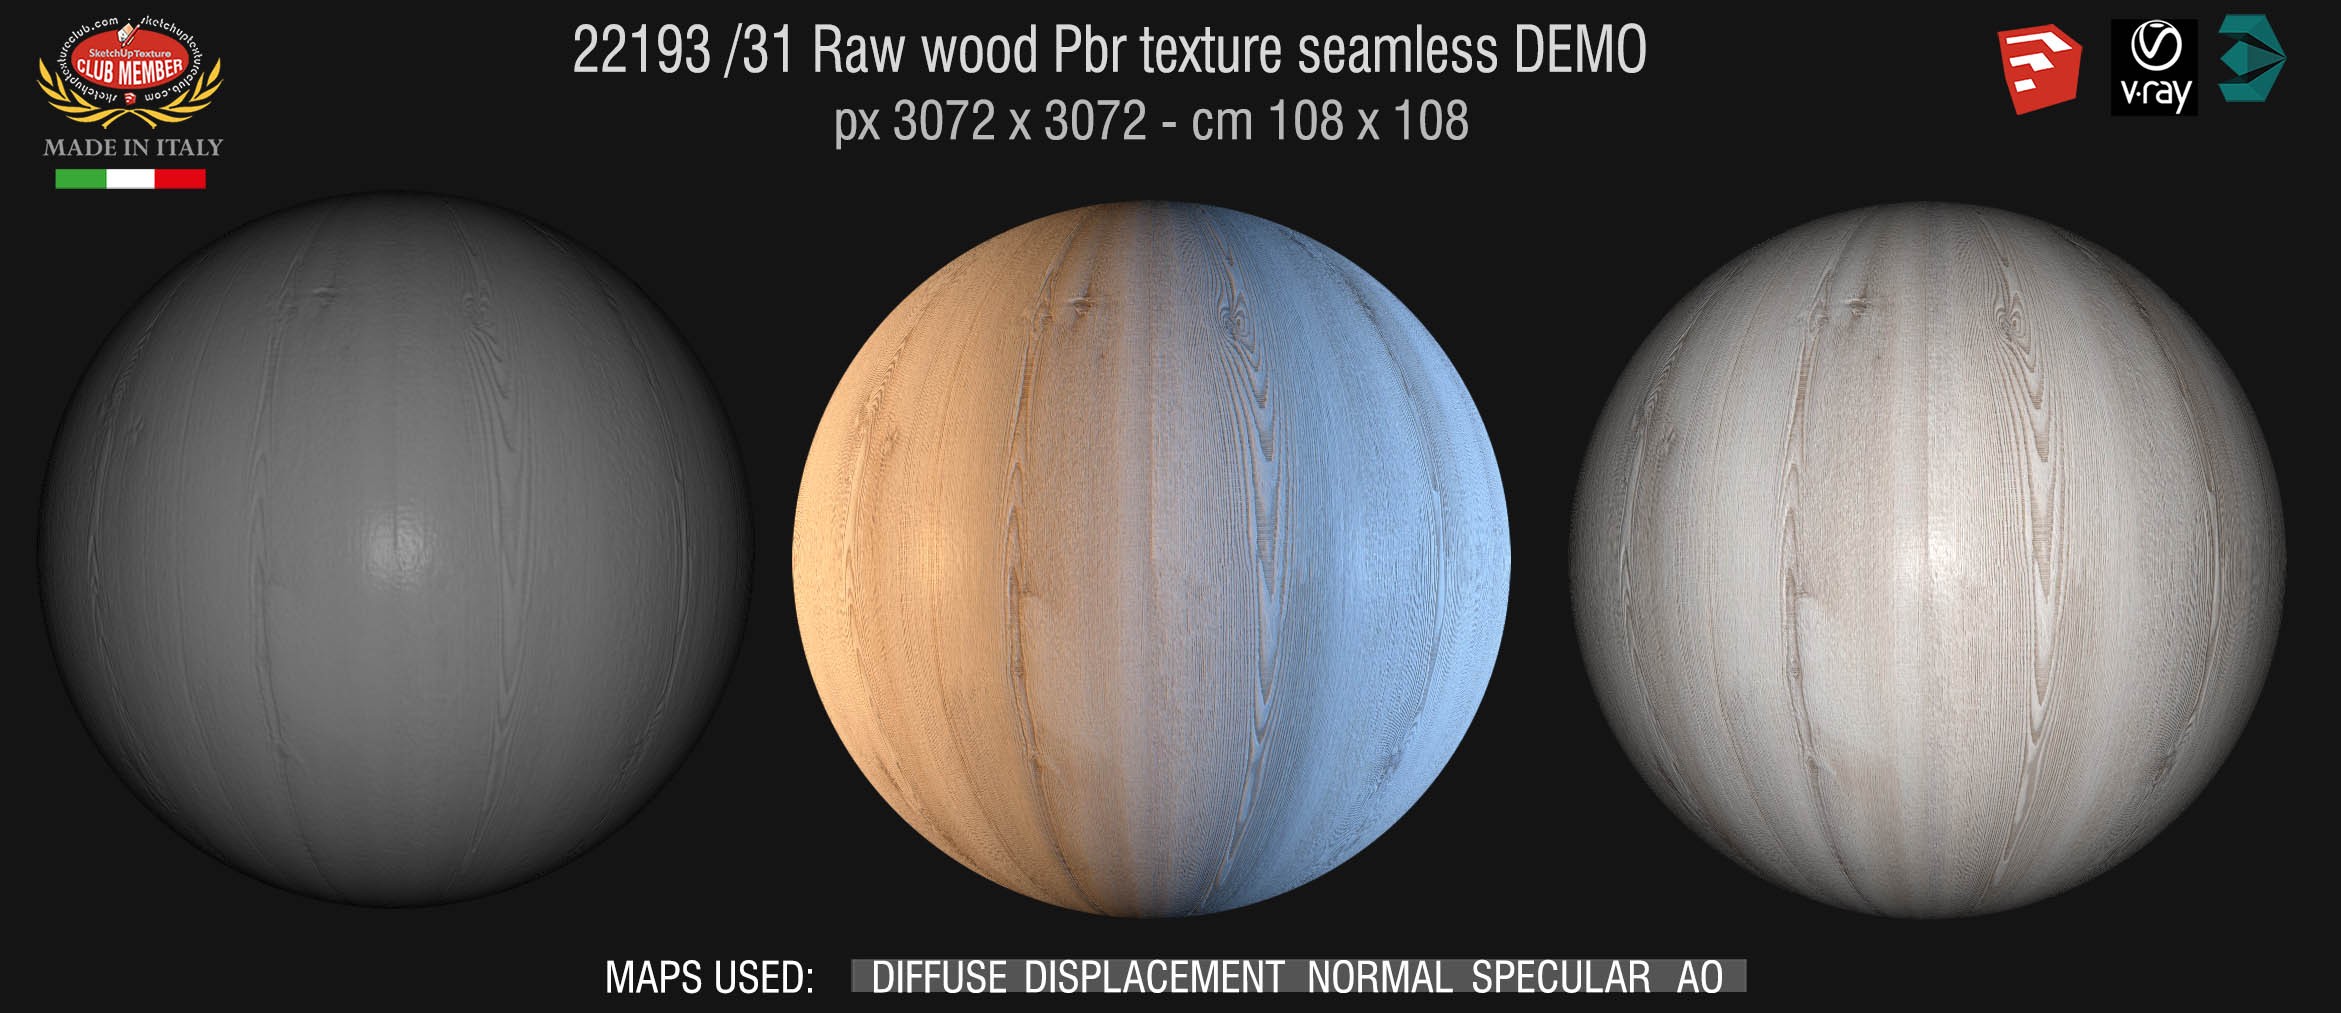 22193/31 Raw wood PBR texture seamless DEMO